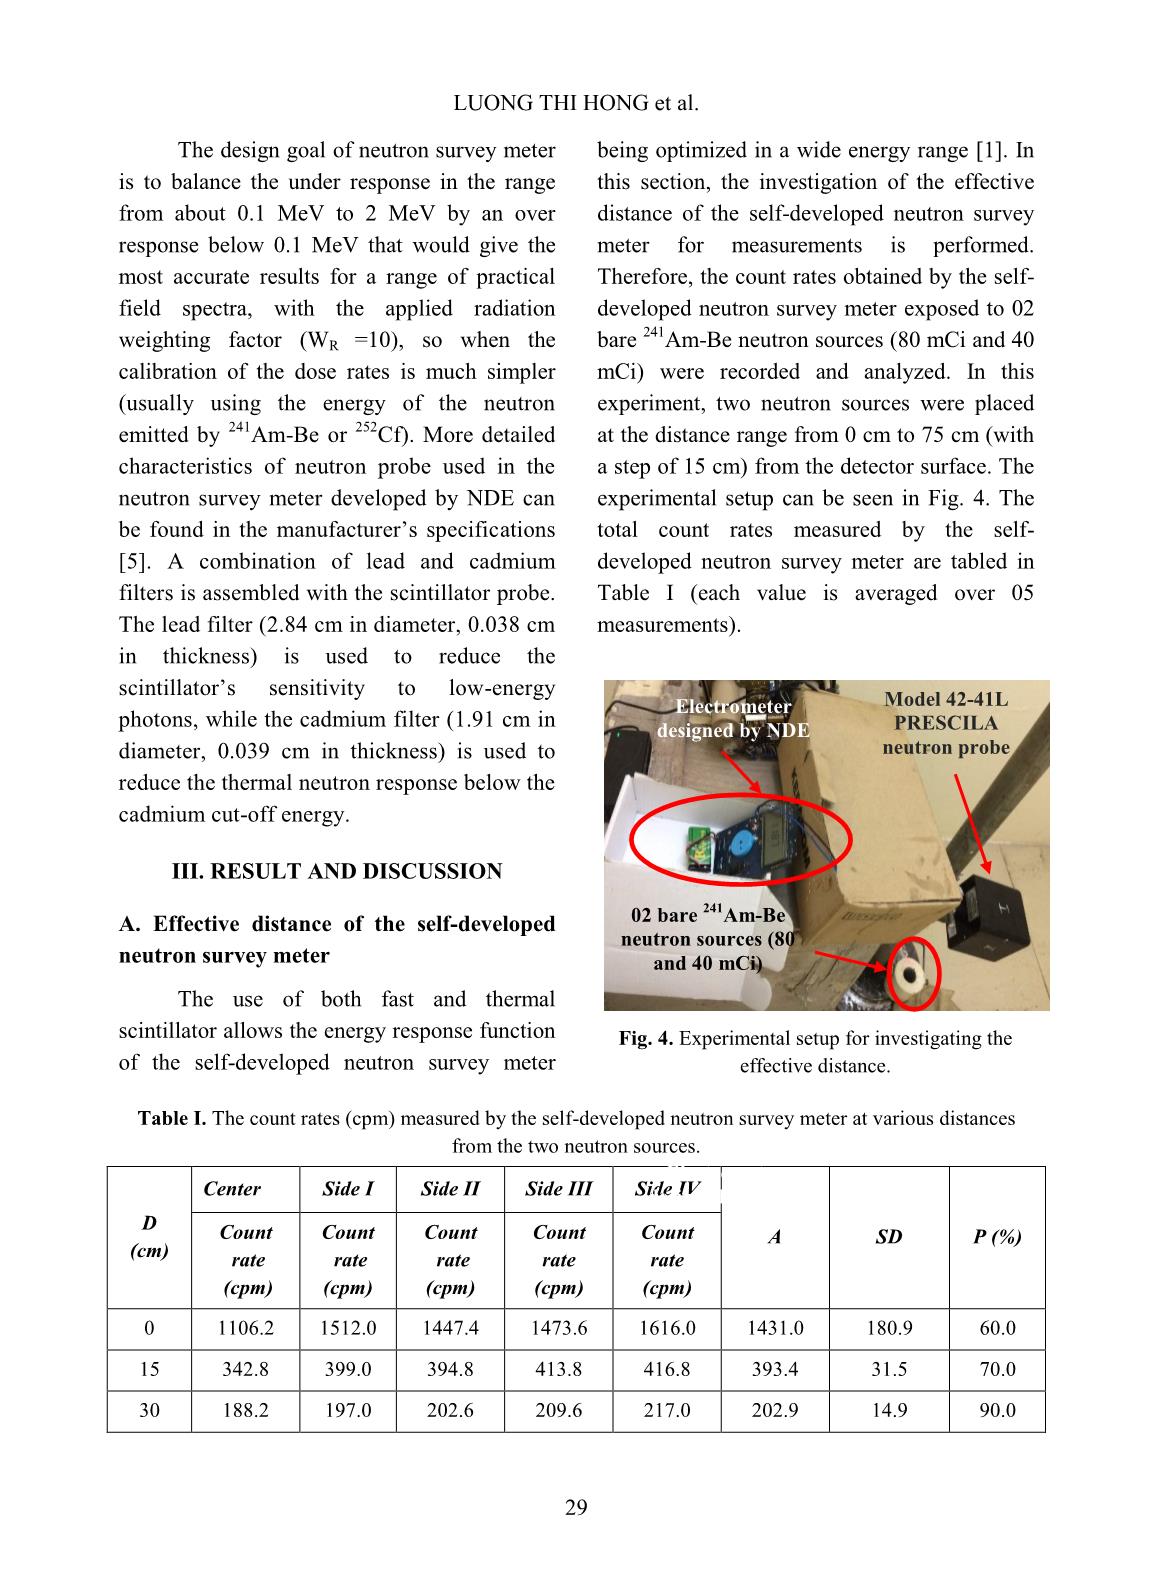 Development of neutron survey meter using prescila neutron probe trang 4